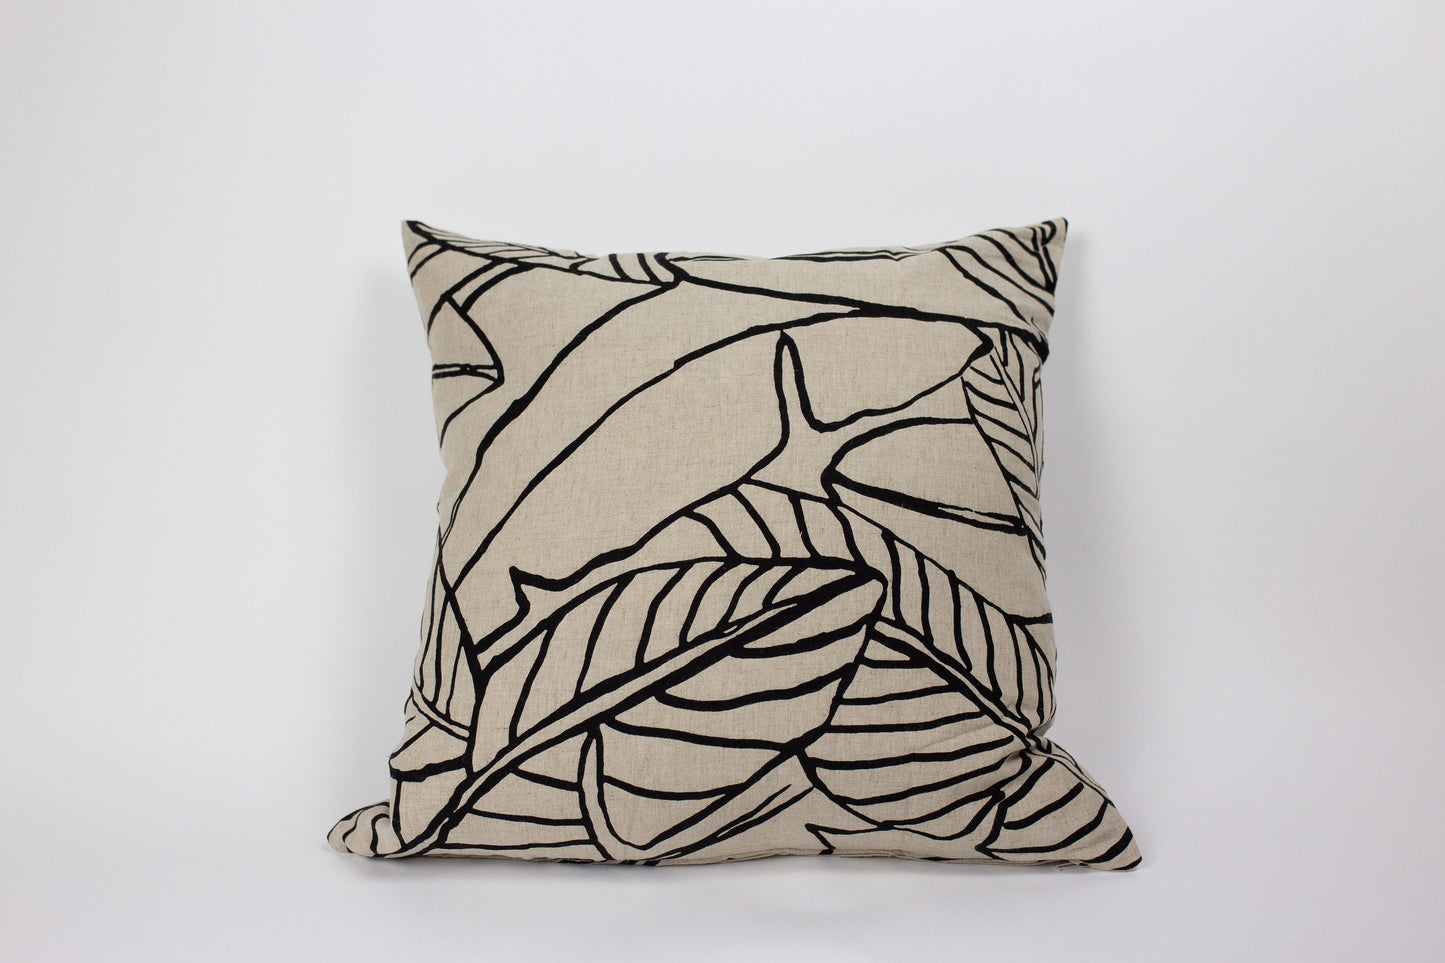 Banana Leaf/Chic Stripes Square Pillow Cover | Black or White design